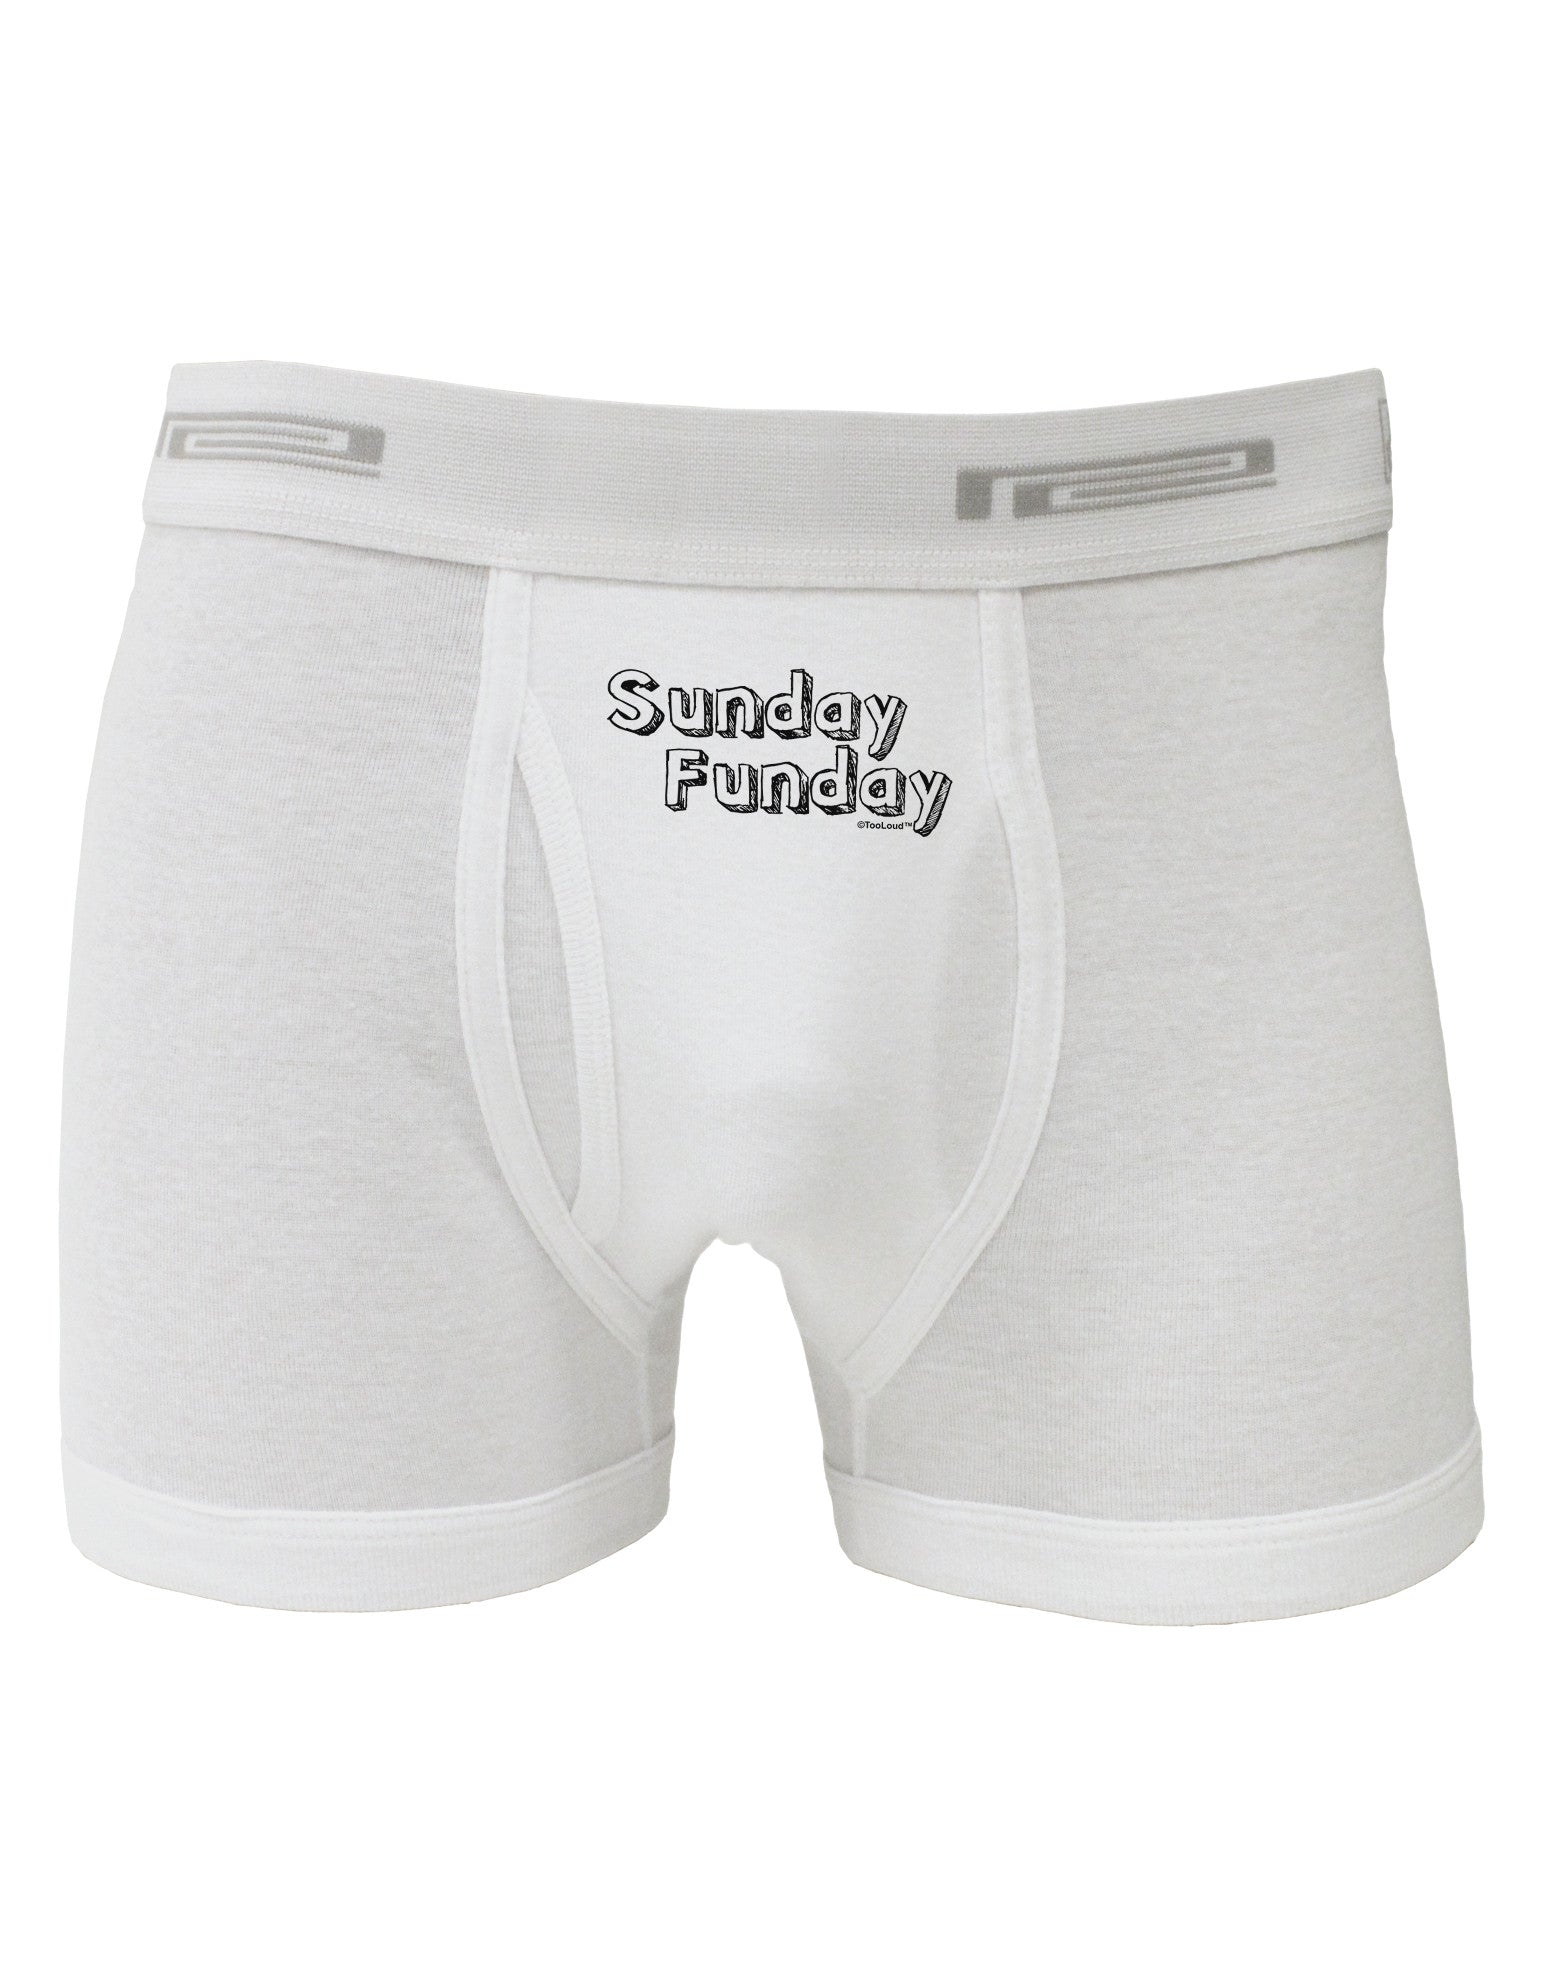 Fantastic Willy Personalised Underwear 